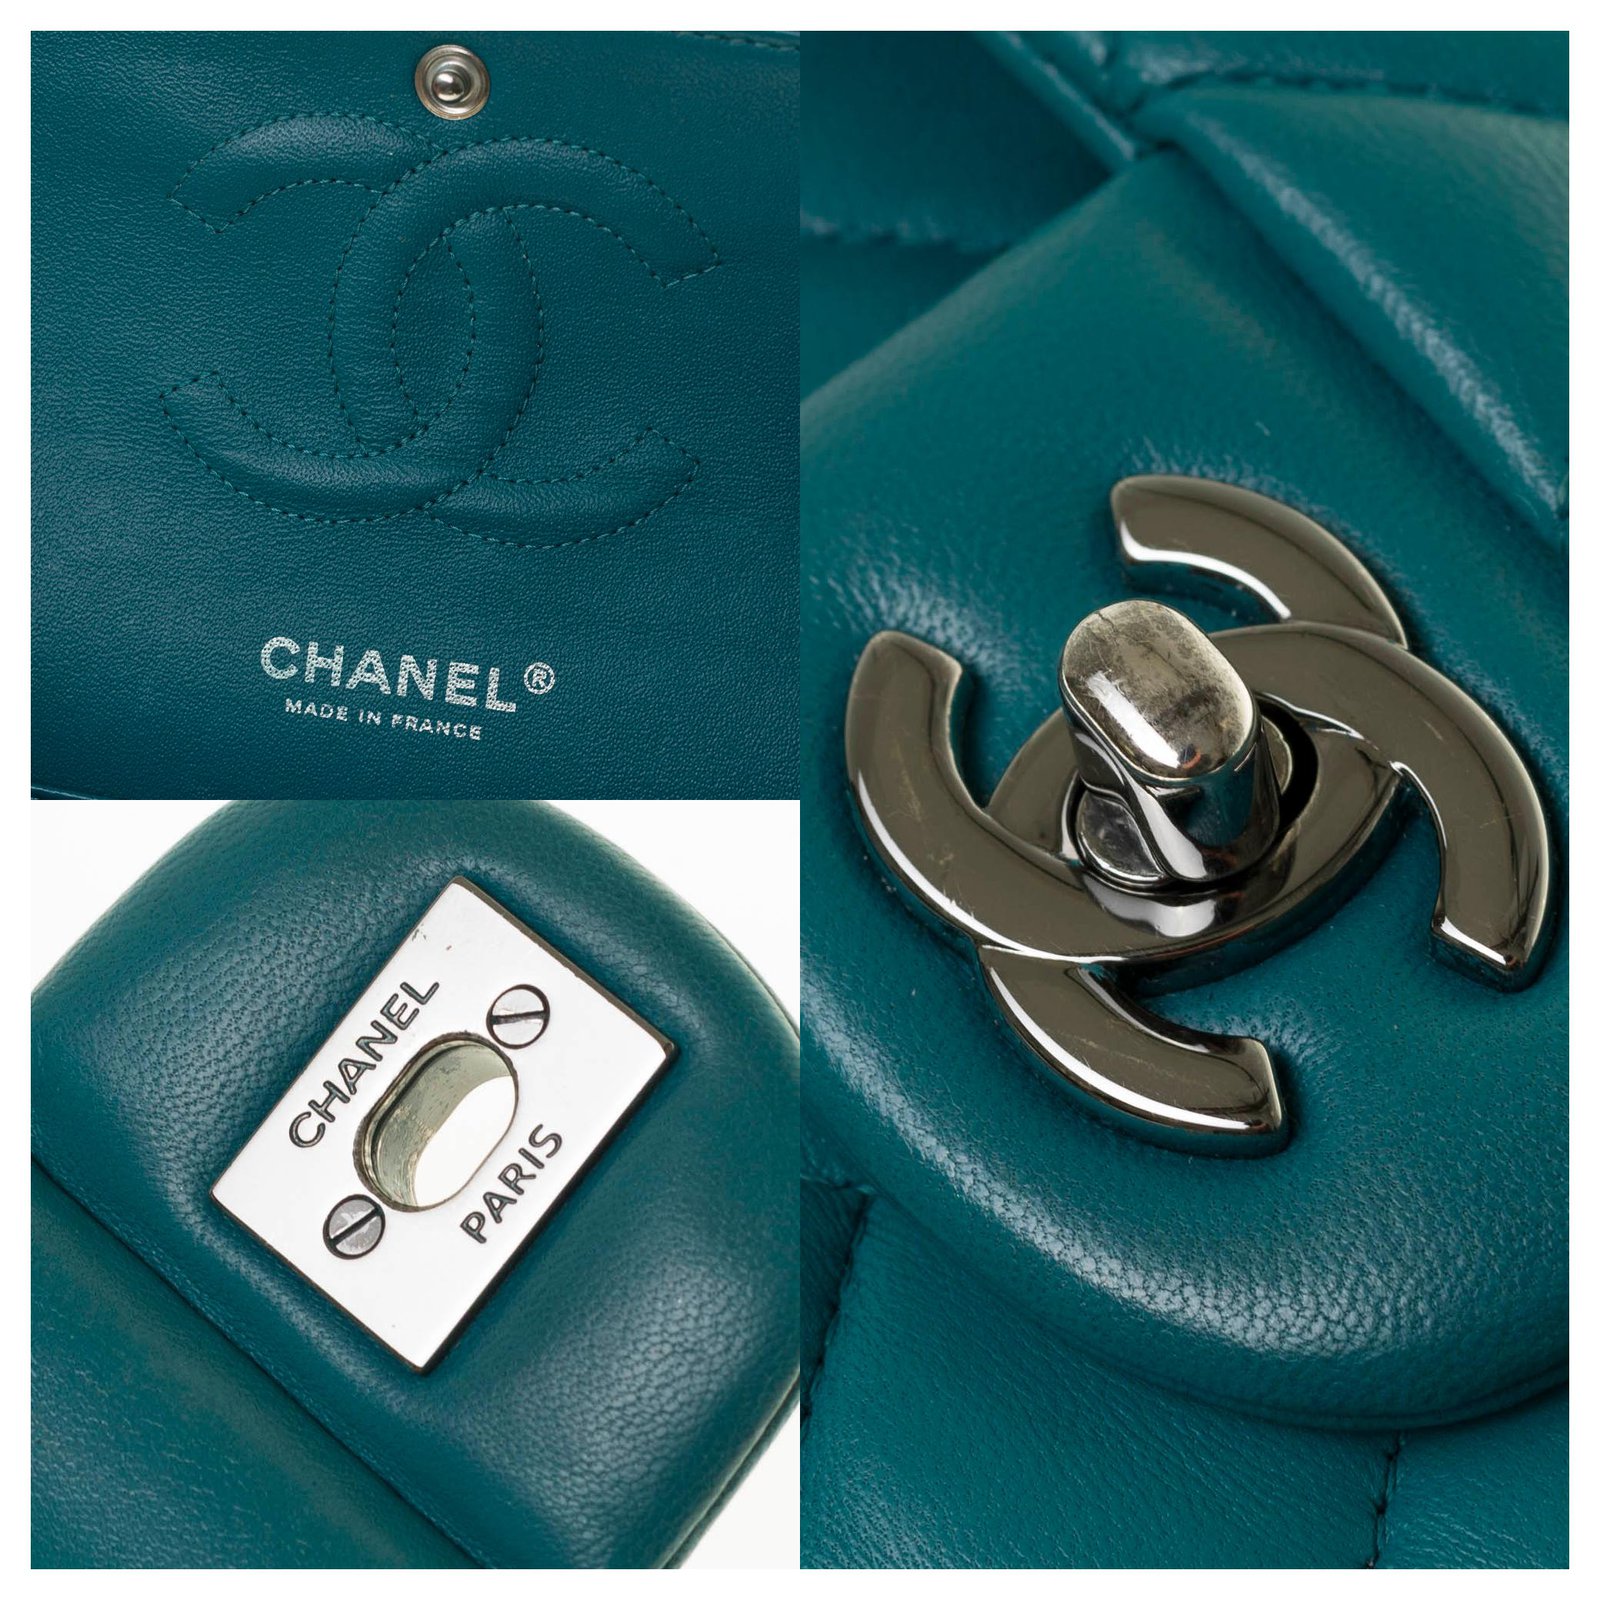 Chanel timeless bag - Gem